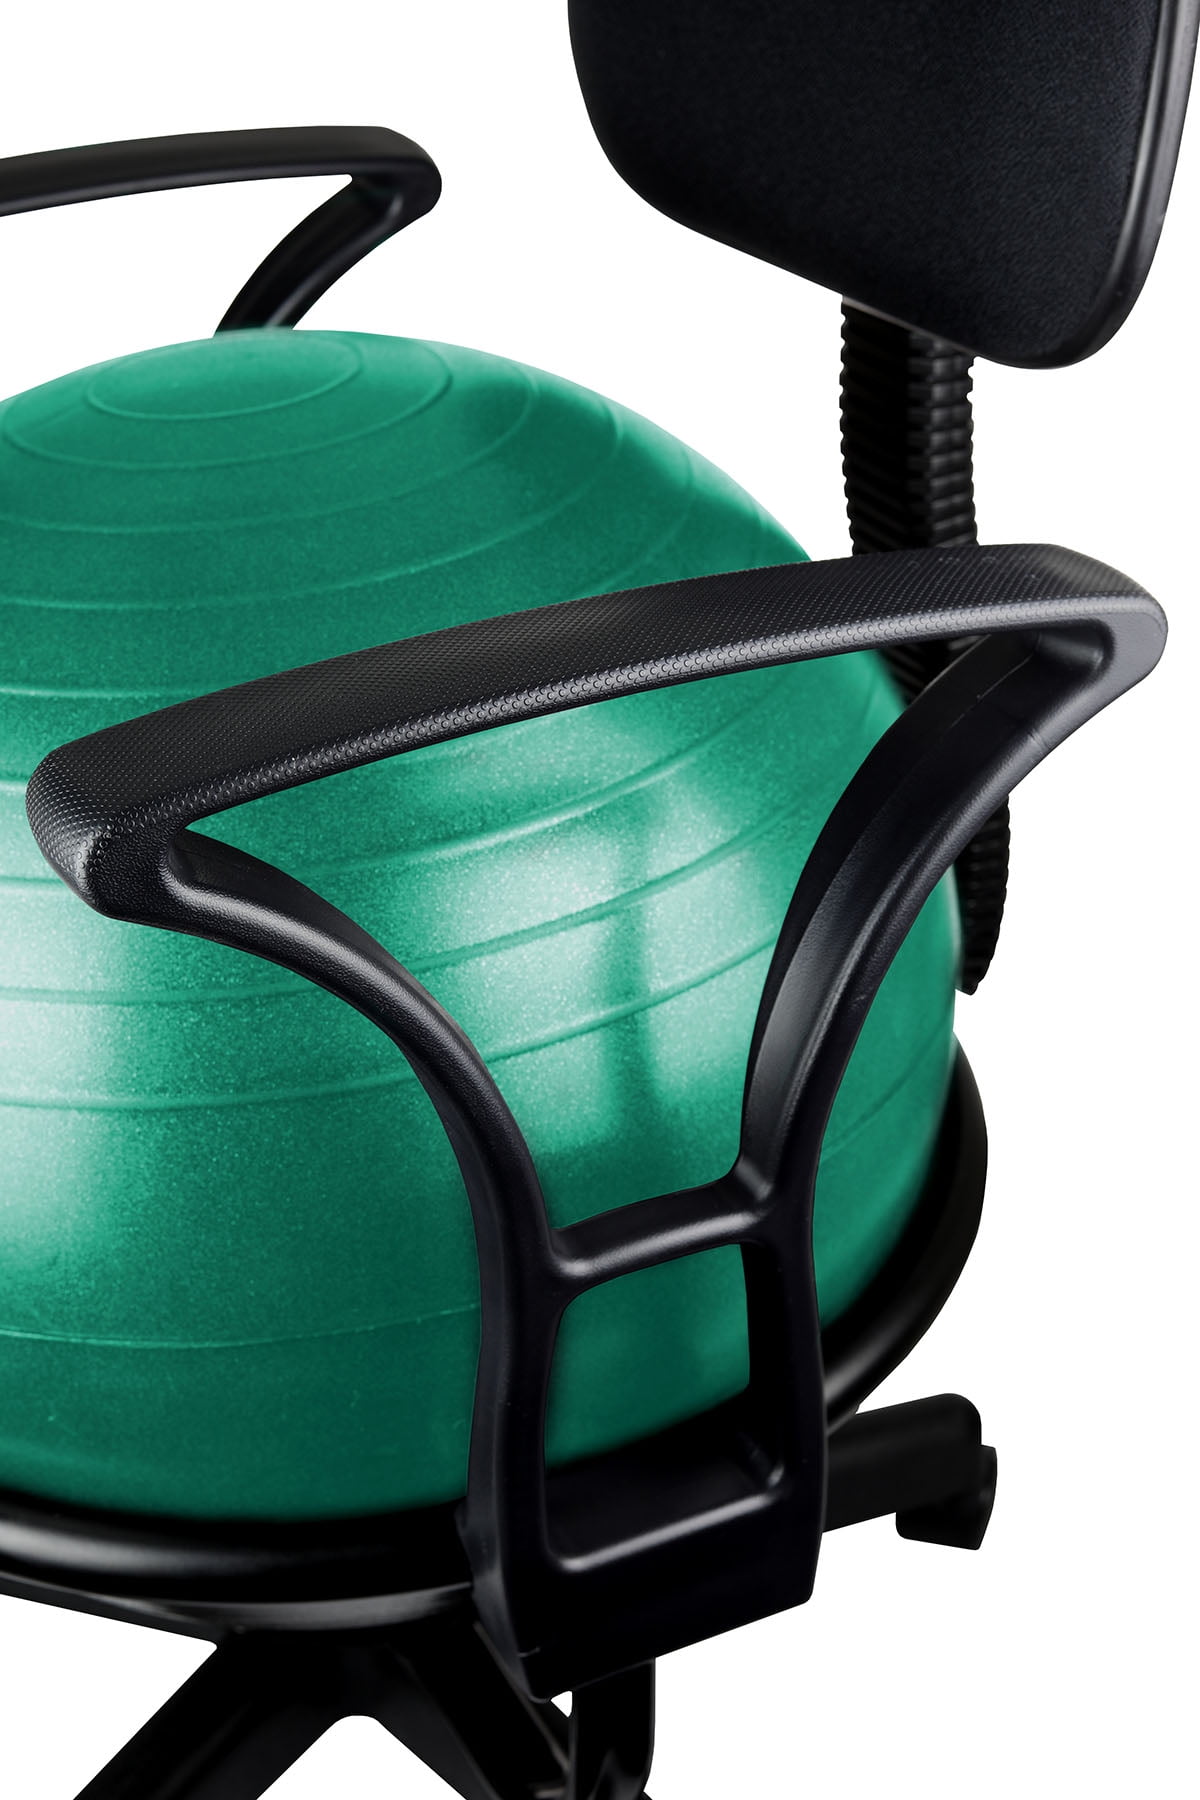 Cando Ball Chair Metal Mobile With Back With Arms With Green Ball Walmartcom Walmartcom